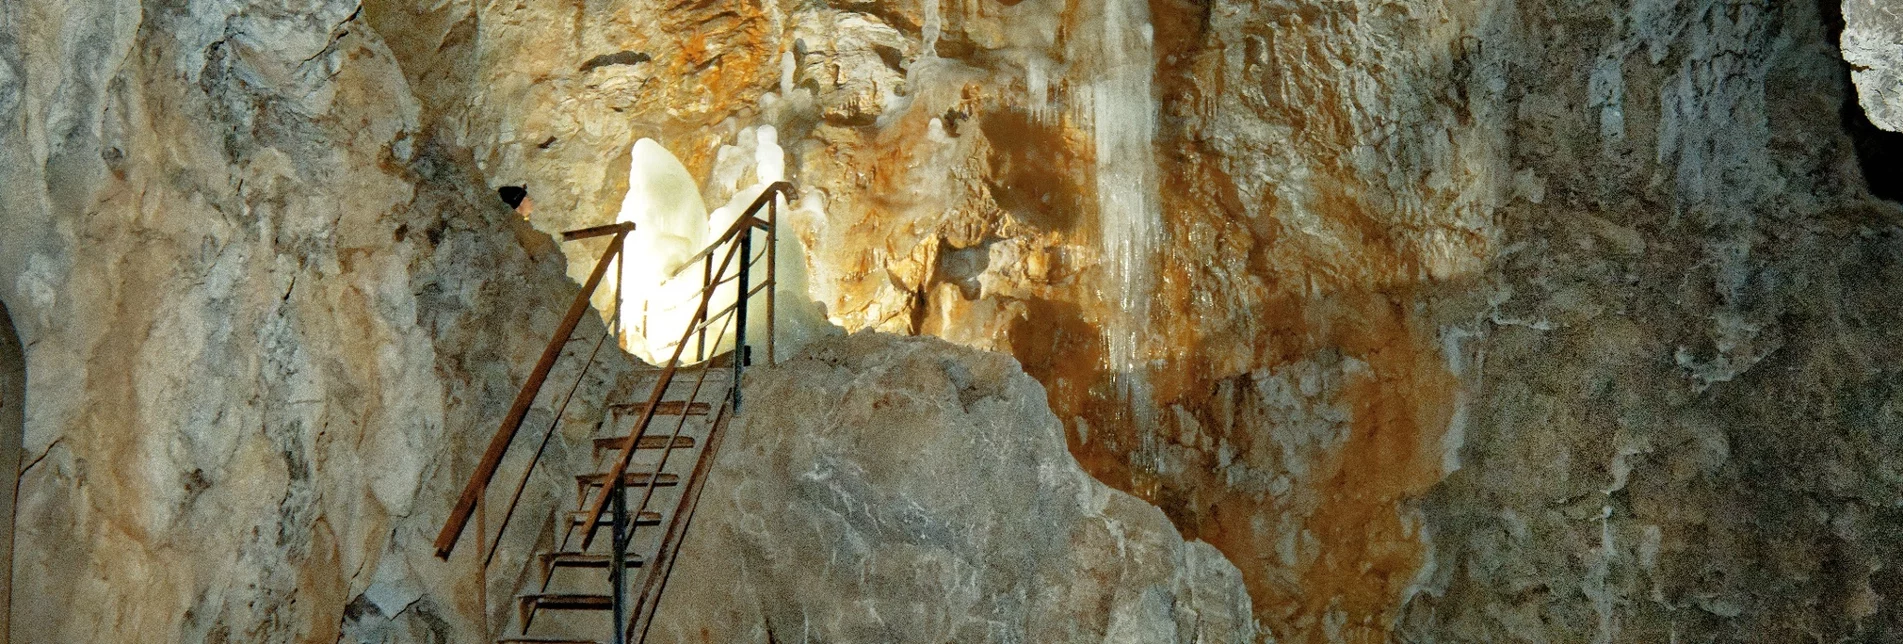 Bergtour Frauenmauerhöhle - Touren-Impression #1 | © Tourismusverband ERZBERG LEOBEN